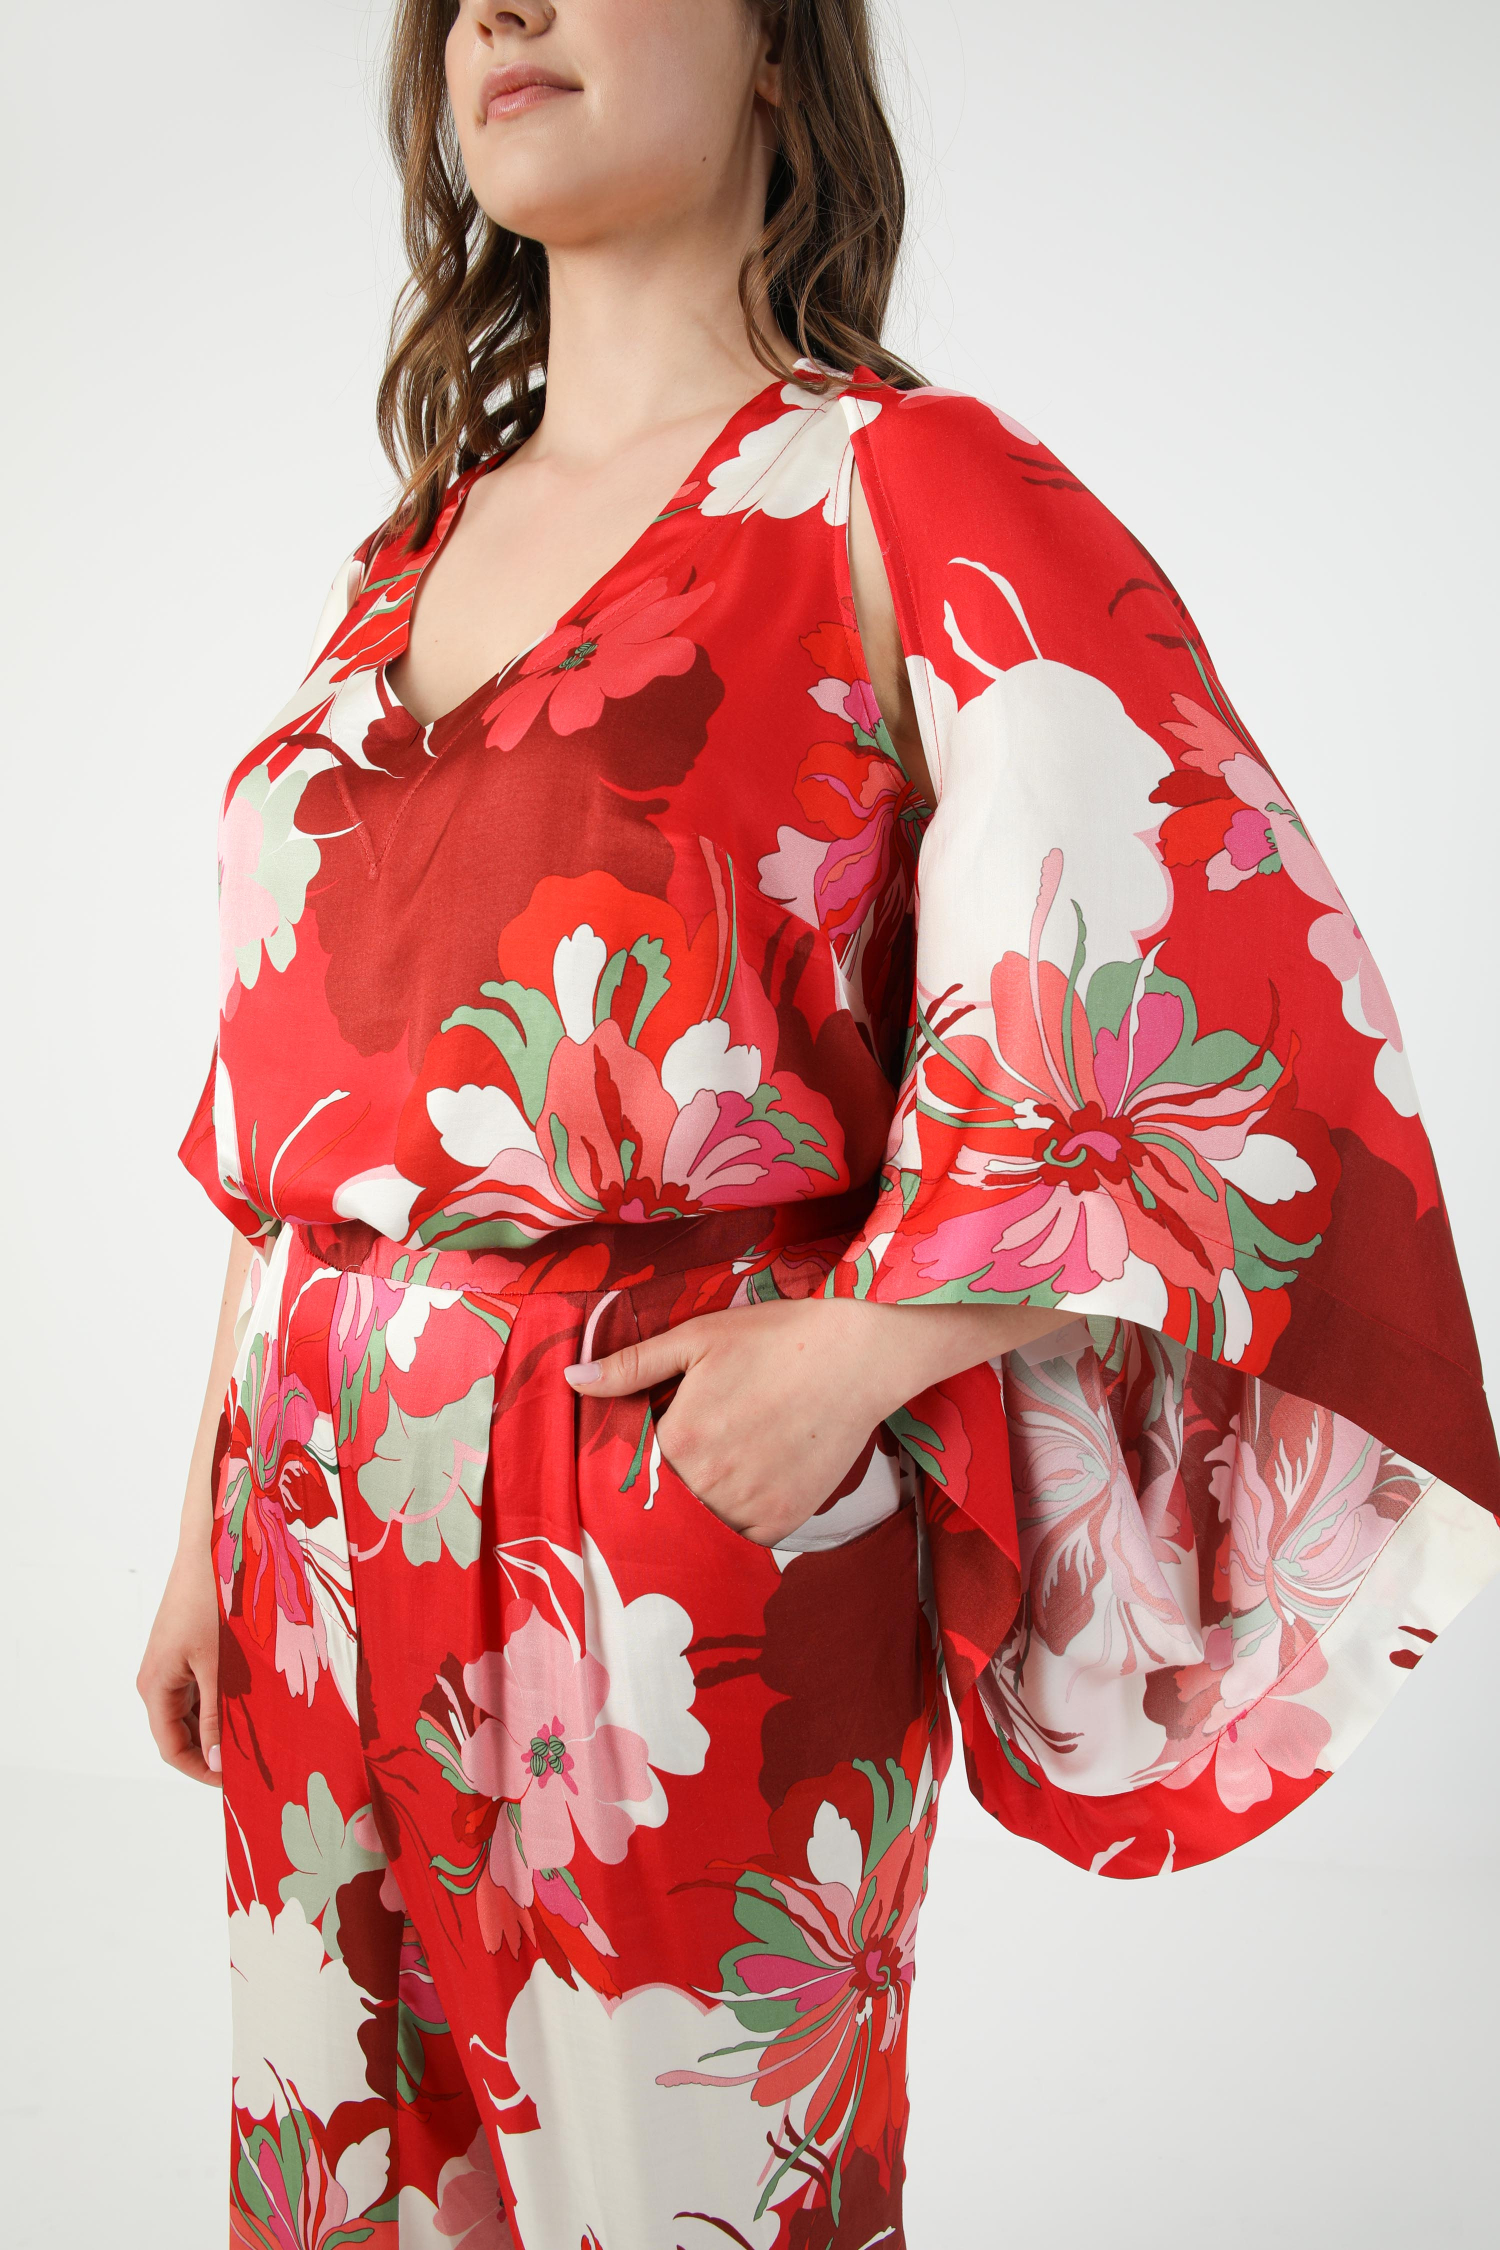 Printed stole bolero in satin floral oeko-tex fabric